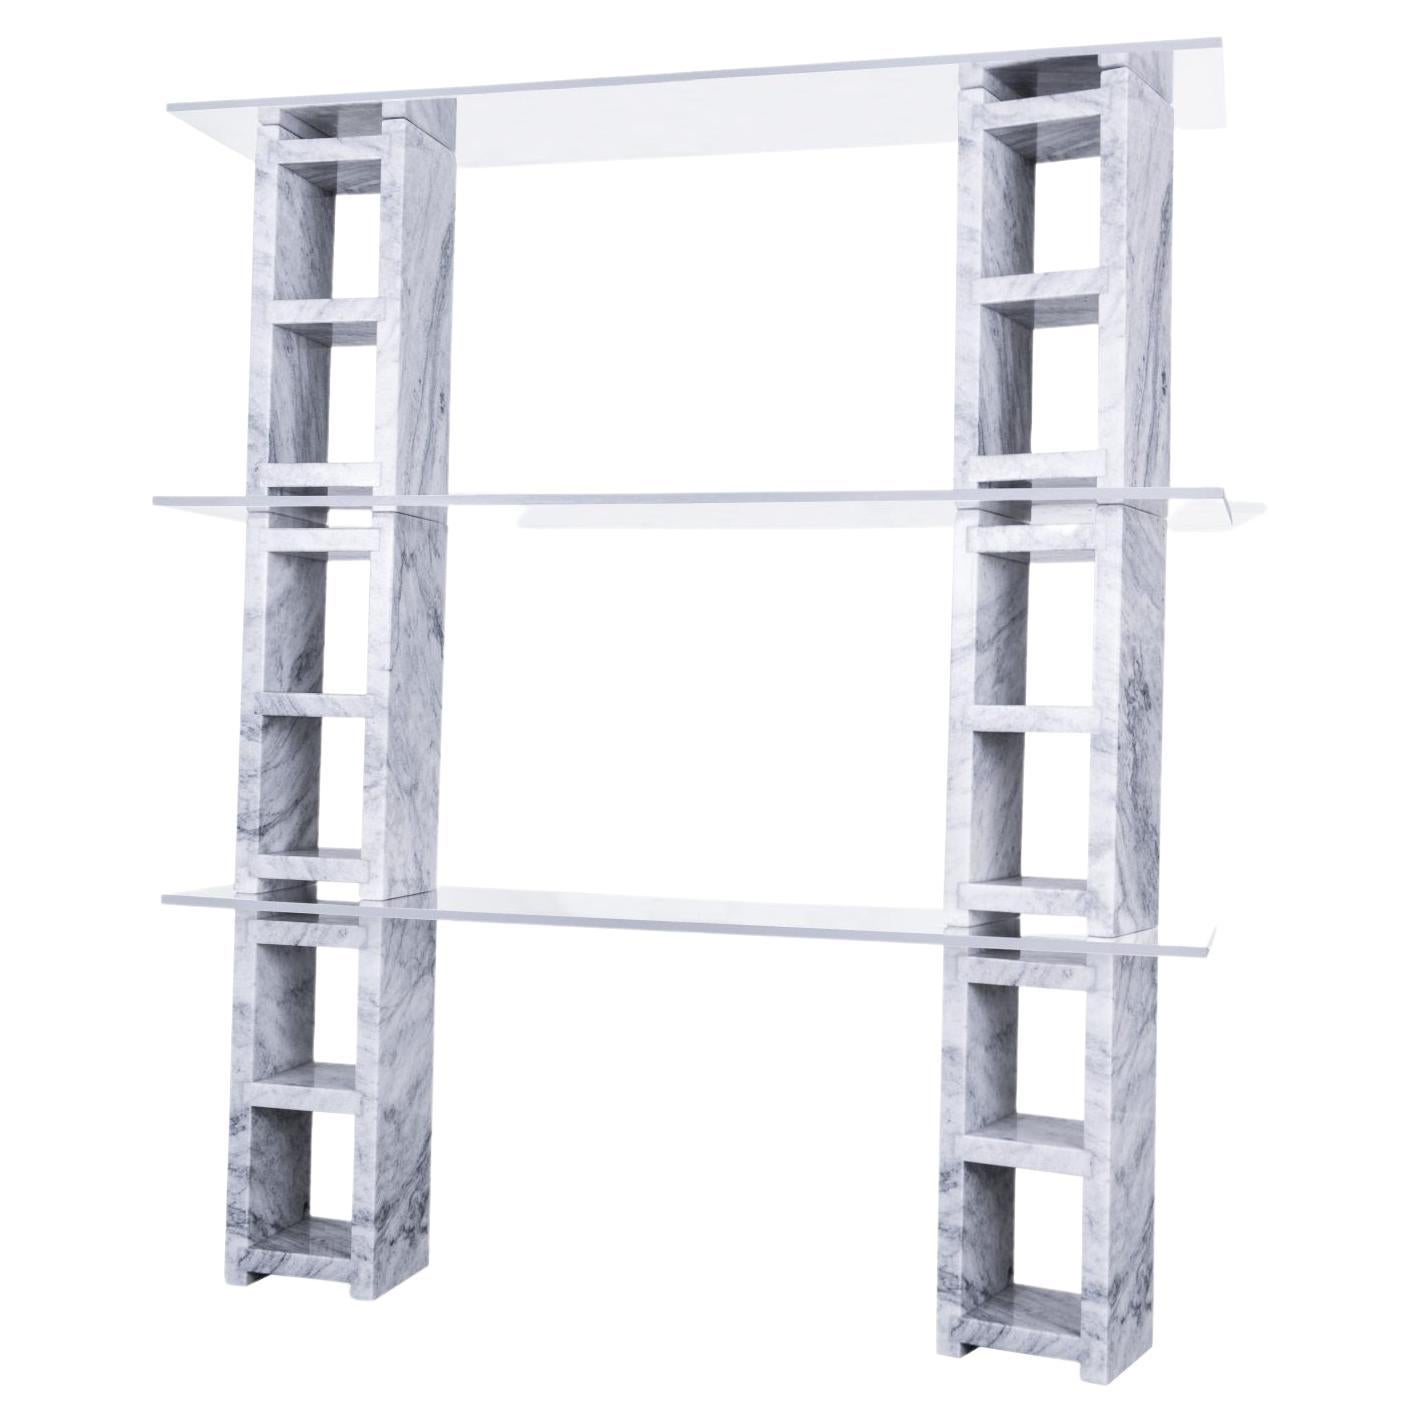 3 Tier Cinder Block Bookshelf – White